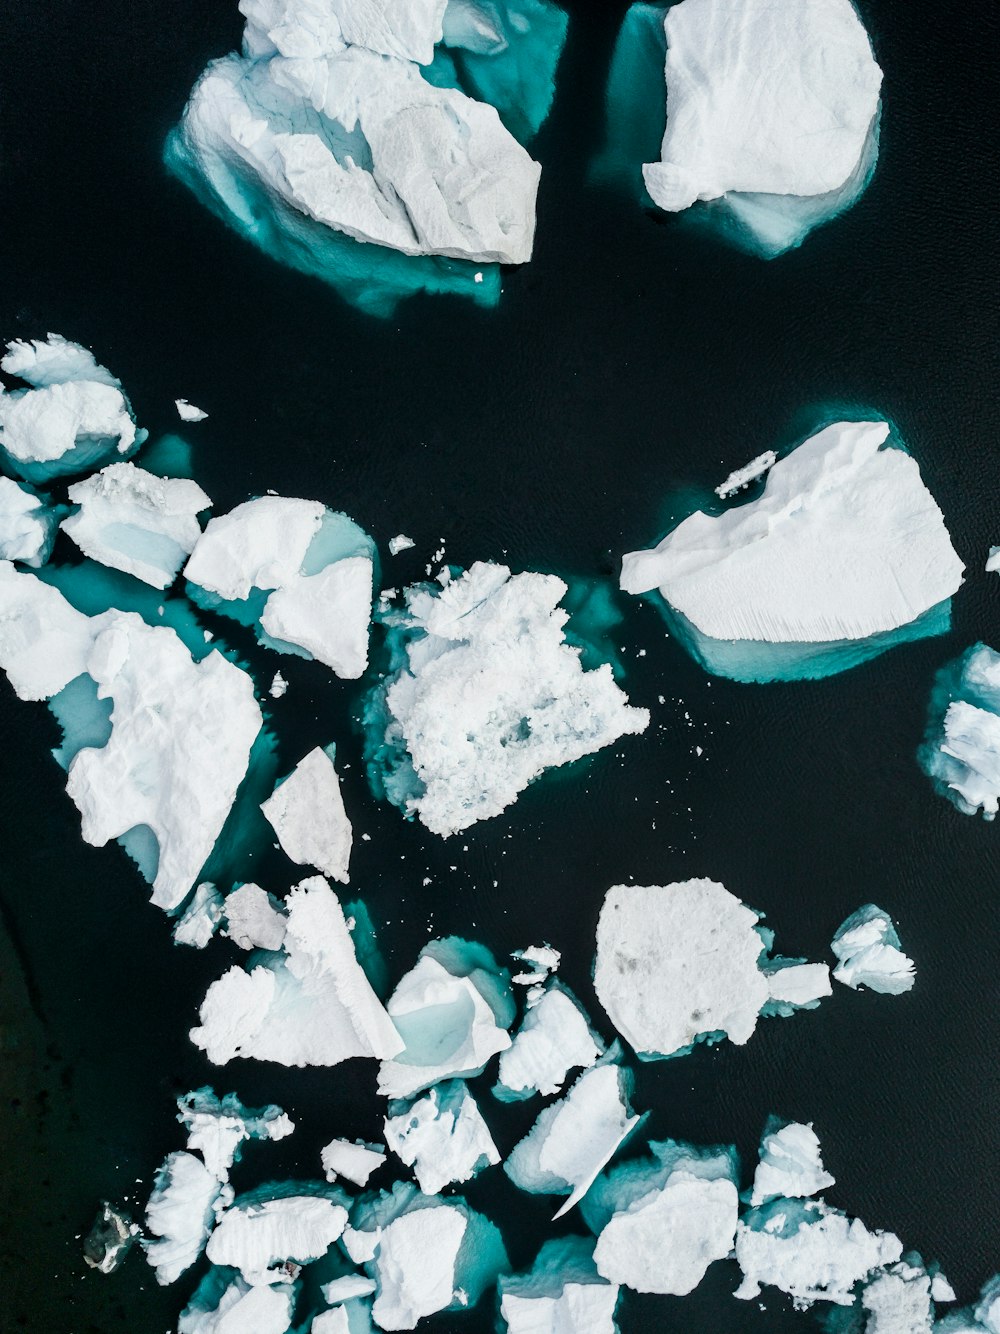 Affichage des icebergs